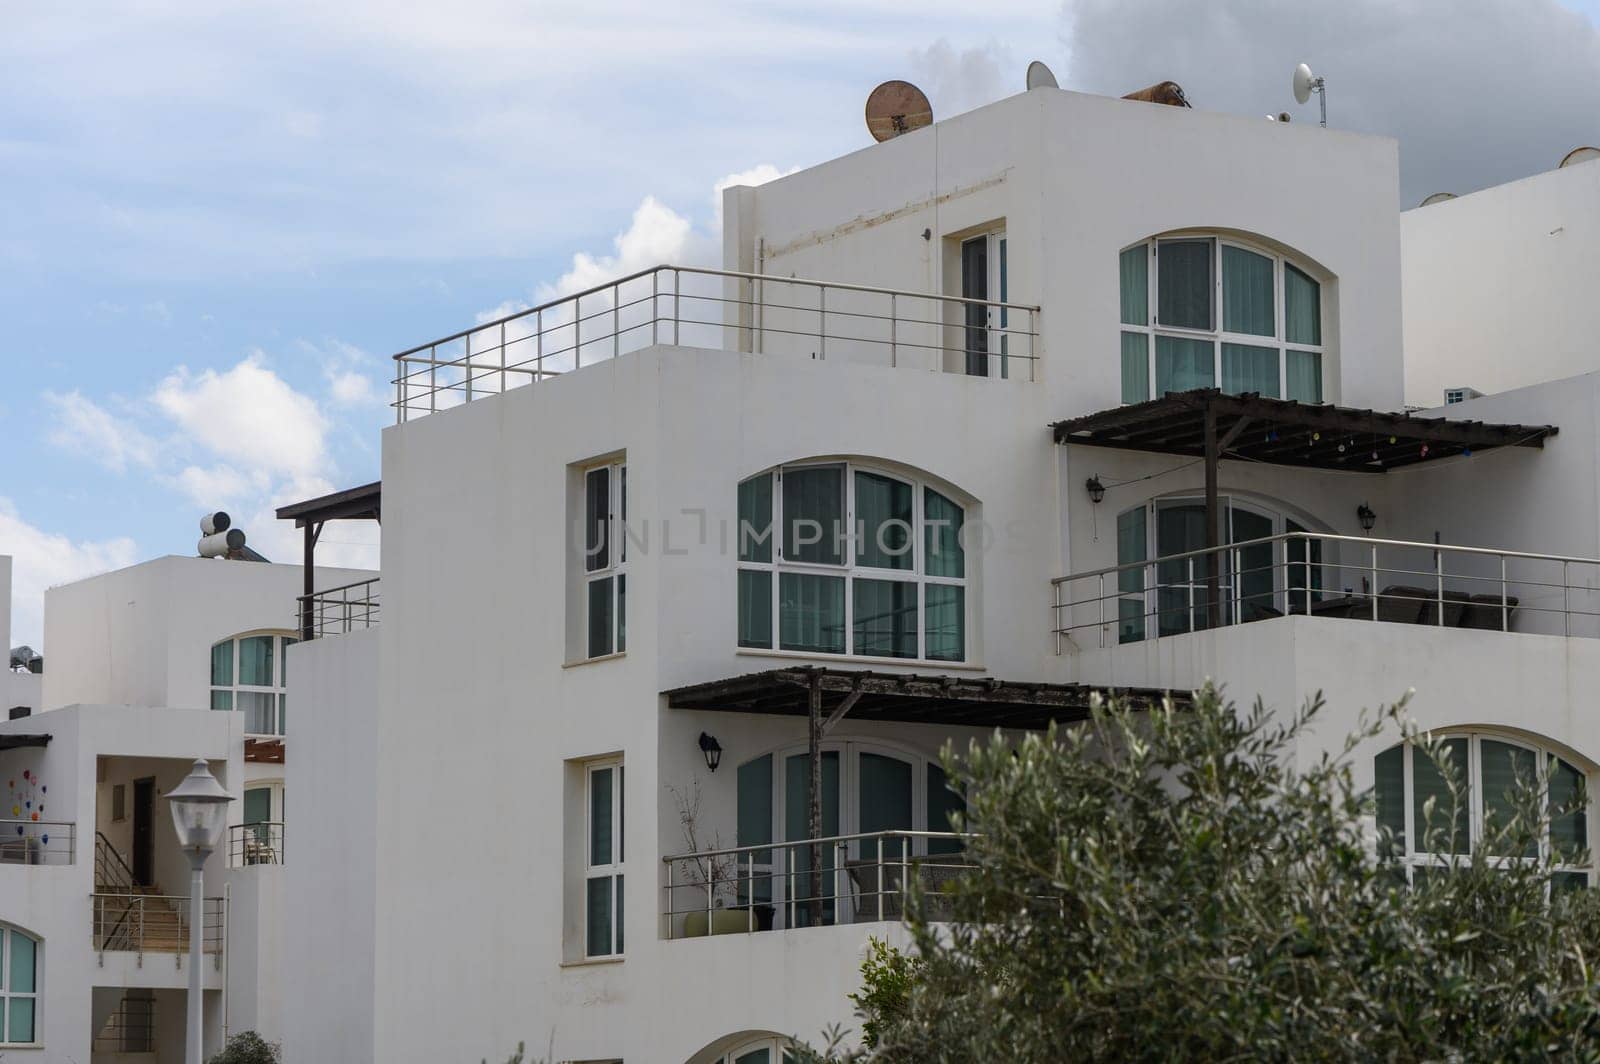 residential complex with white Mediterranean style villas 1